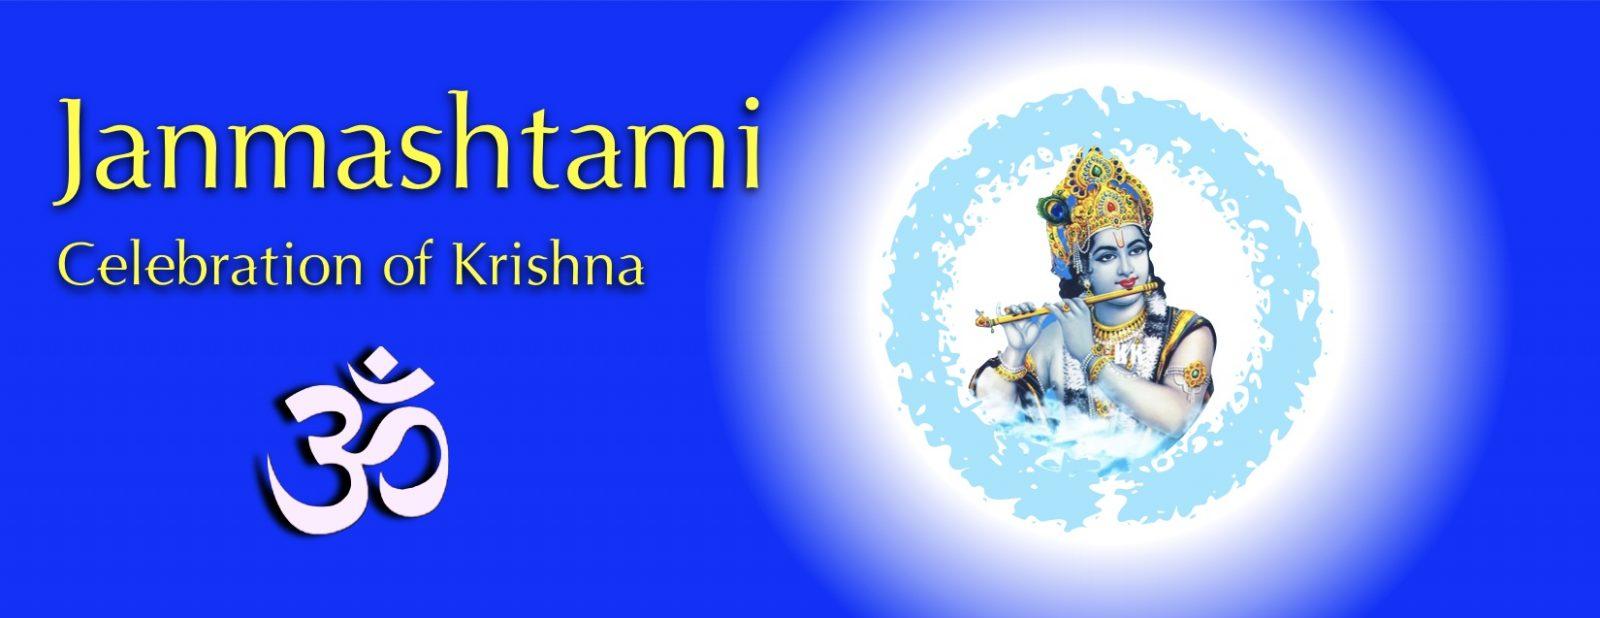 Janmashtami Celebration Of Krishna Greeting Card